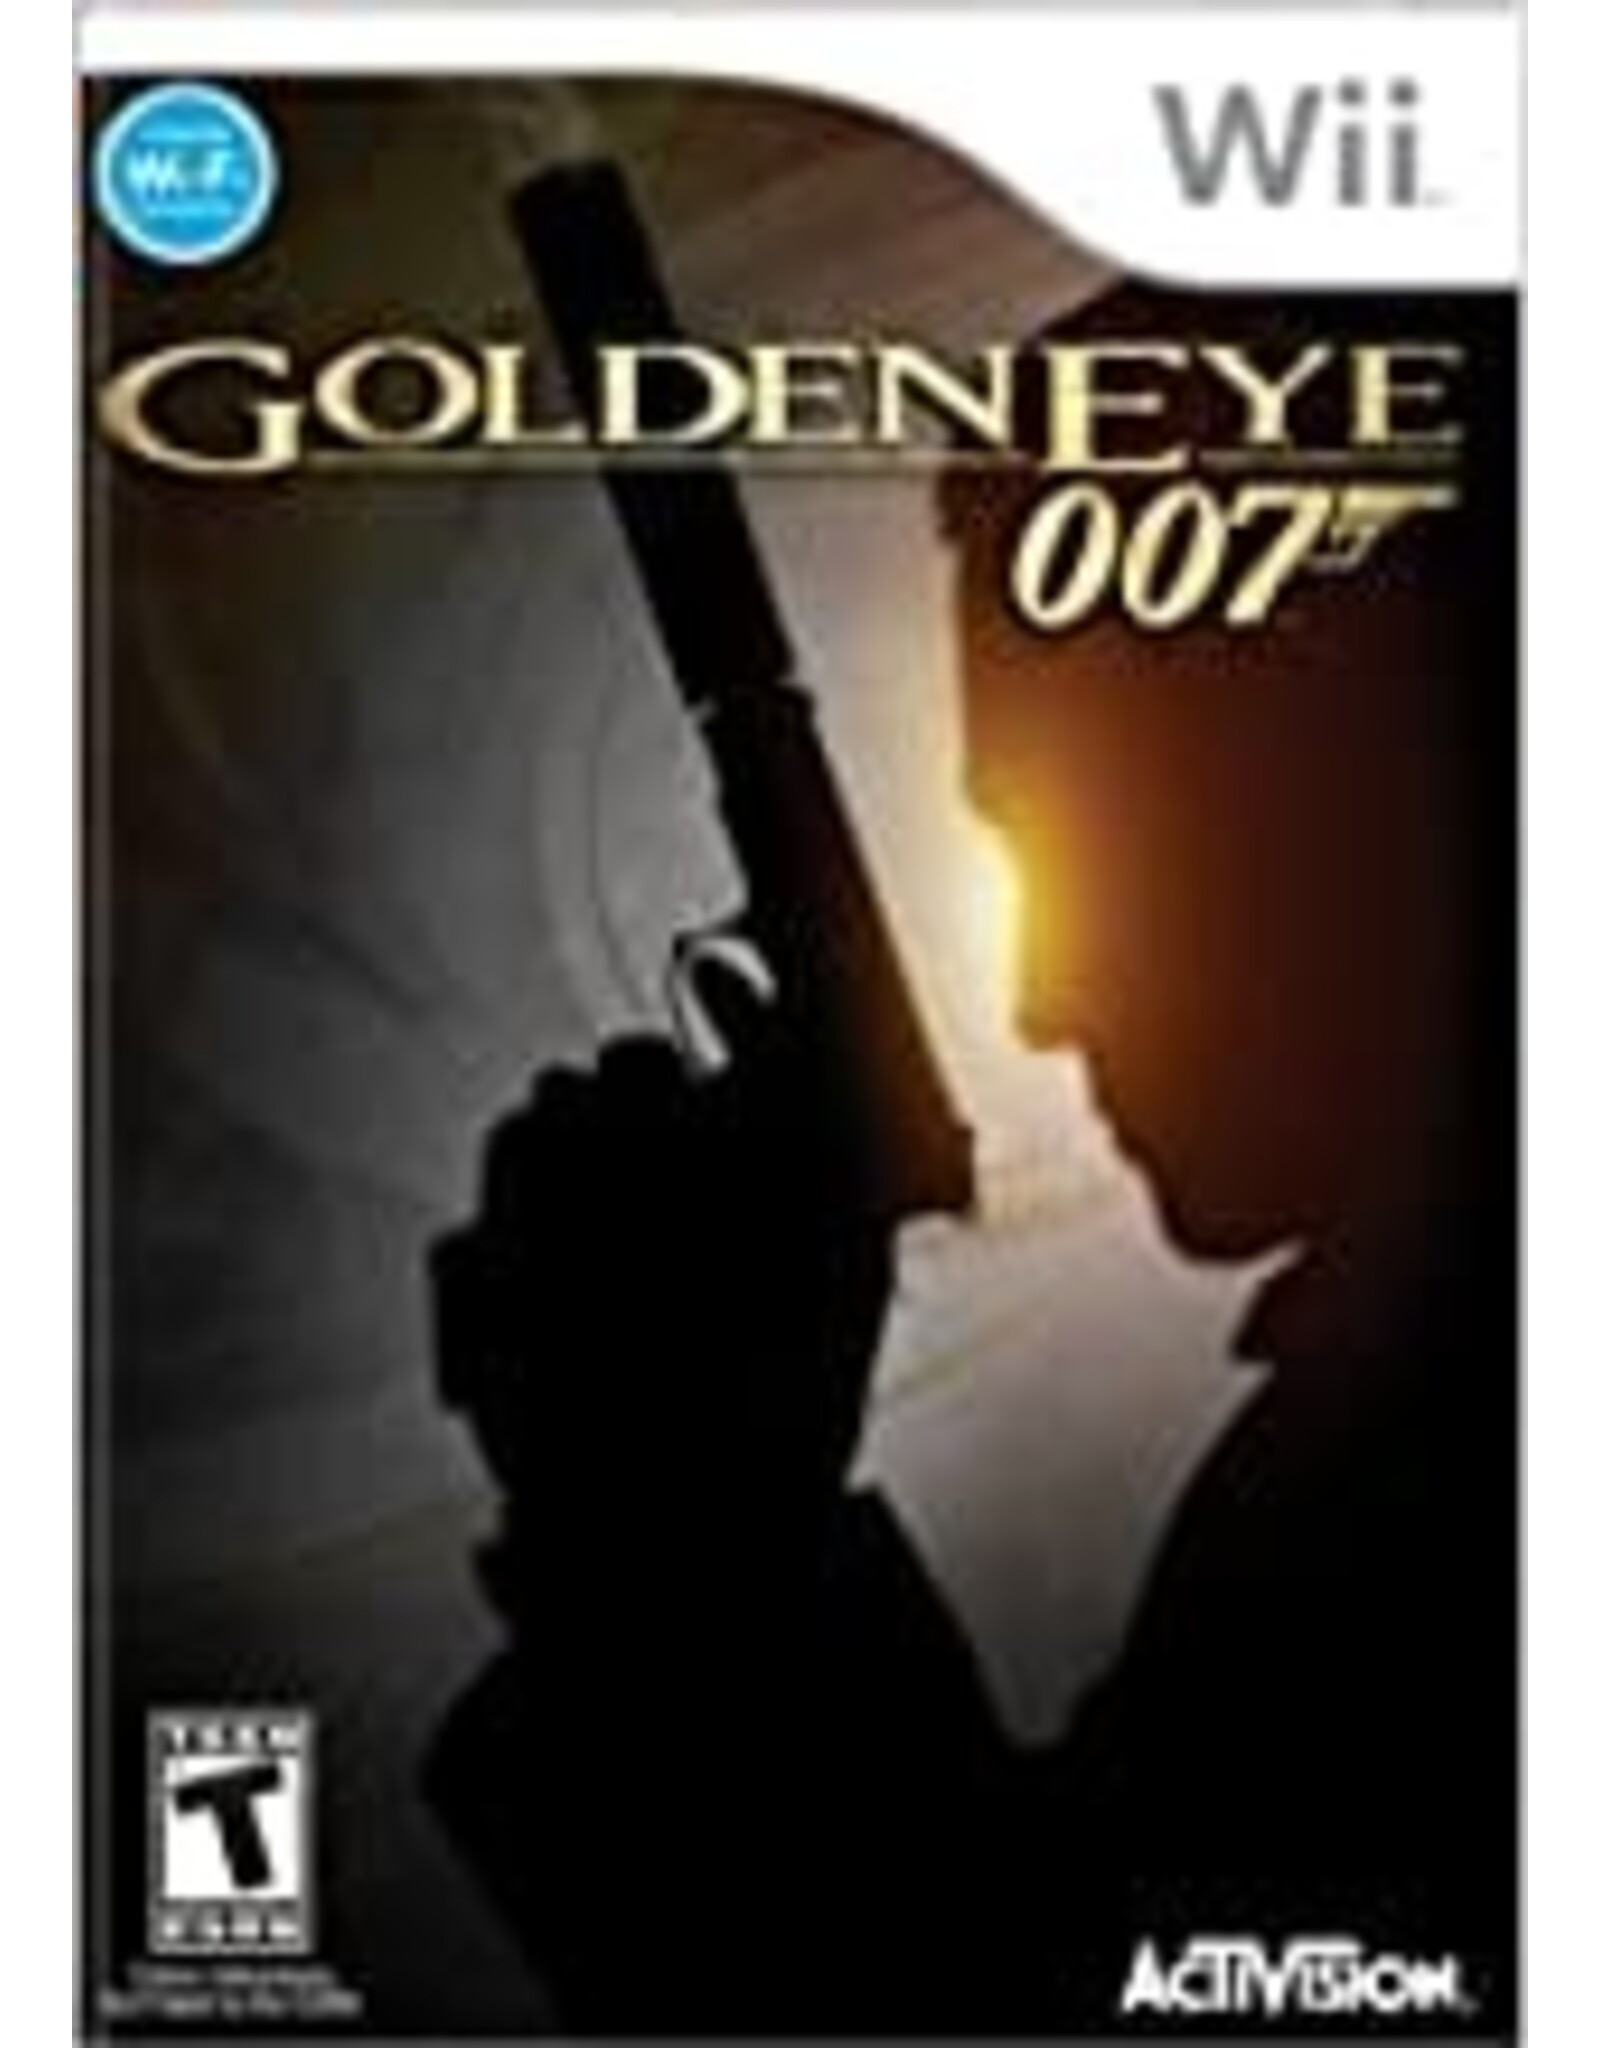 Wii 007 GoldenEye (No Manual)